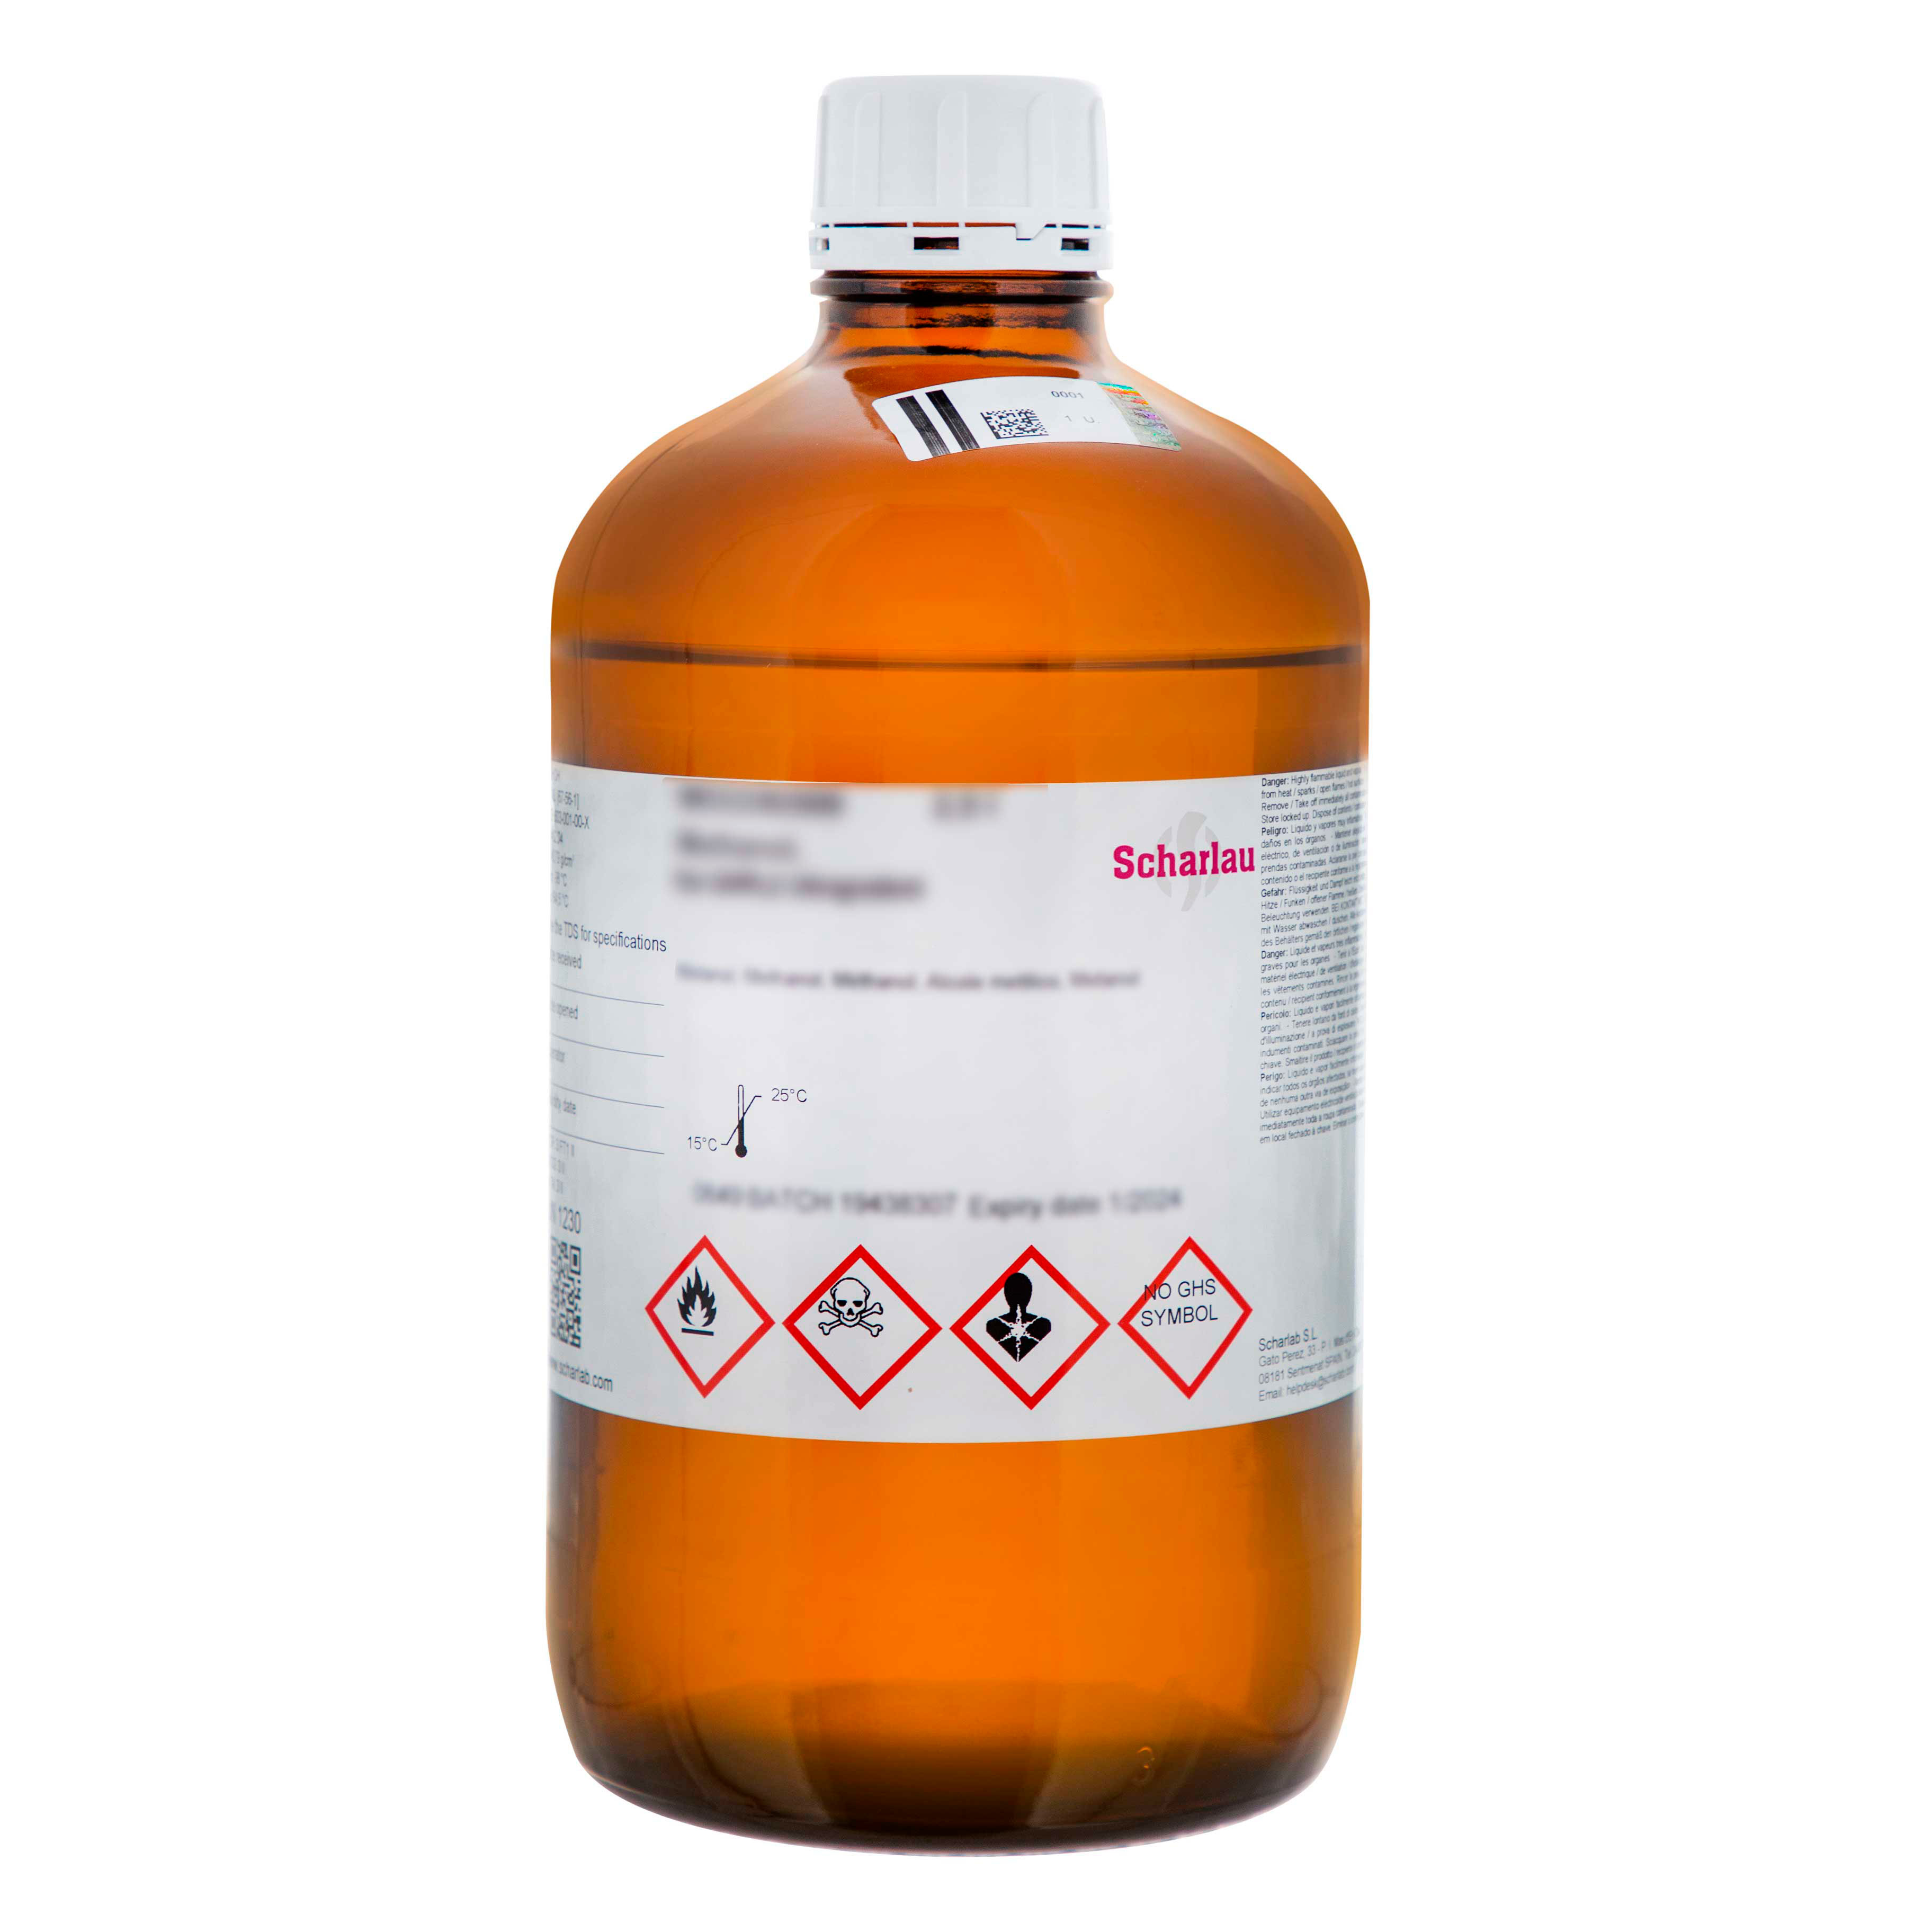 tert-Butyl methyl ether, HPLC grade, Methyl tert-butyl ether, MTBE